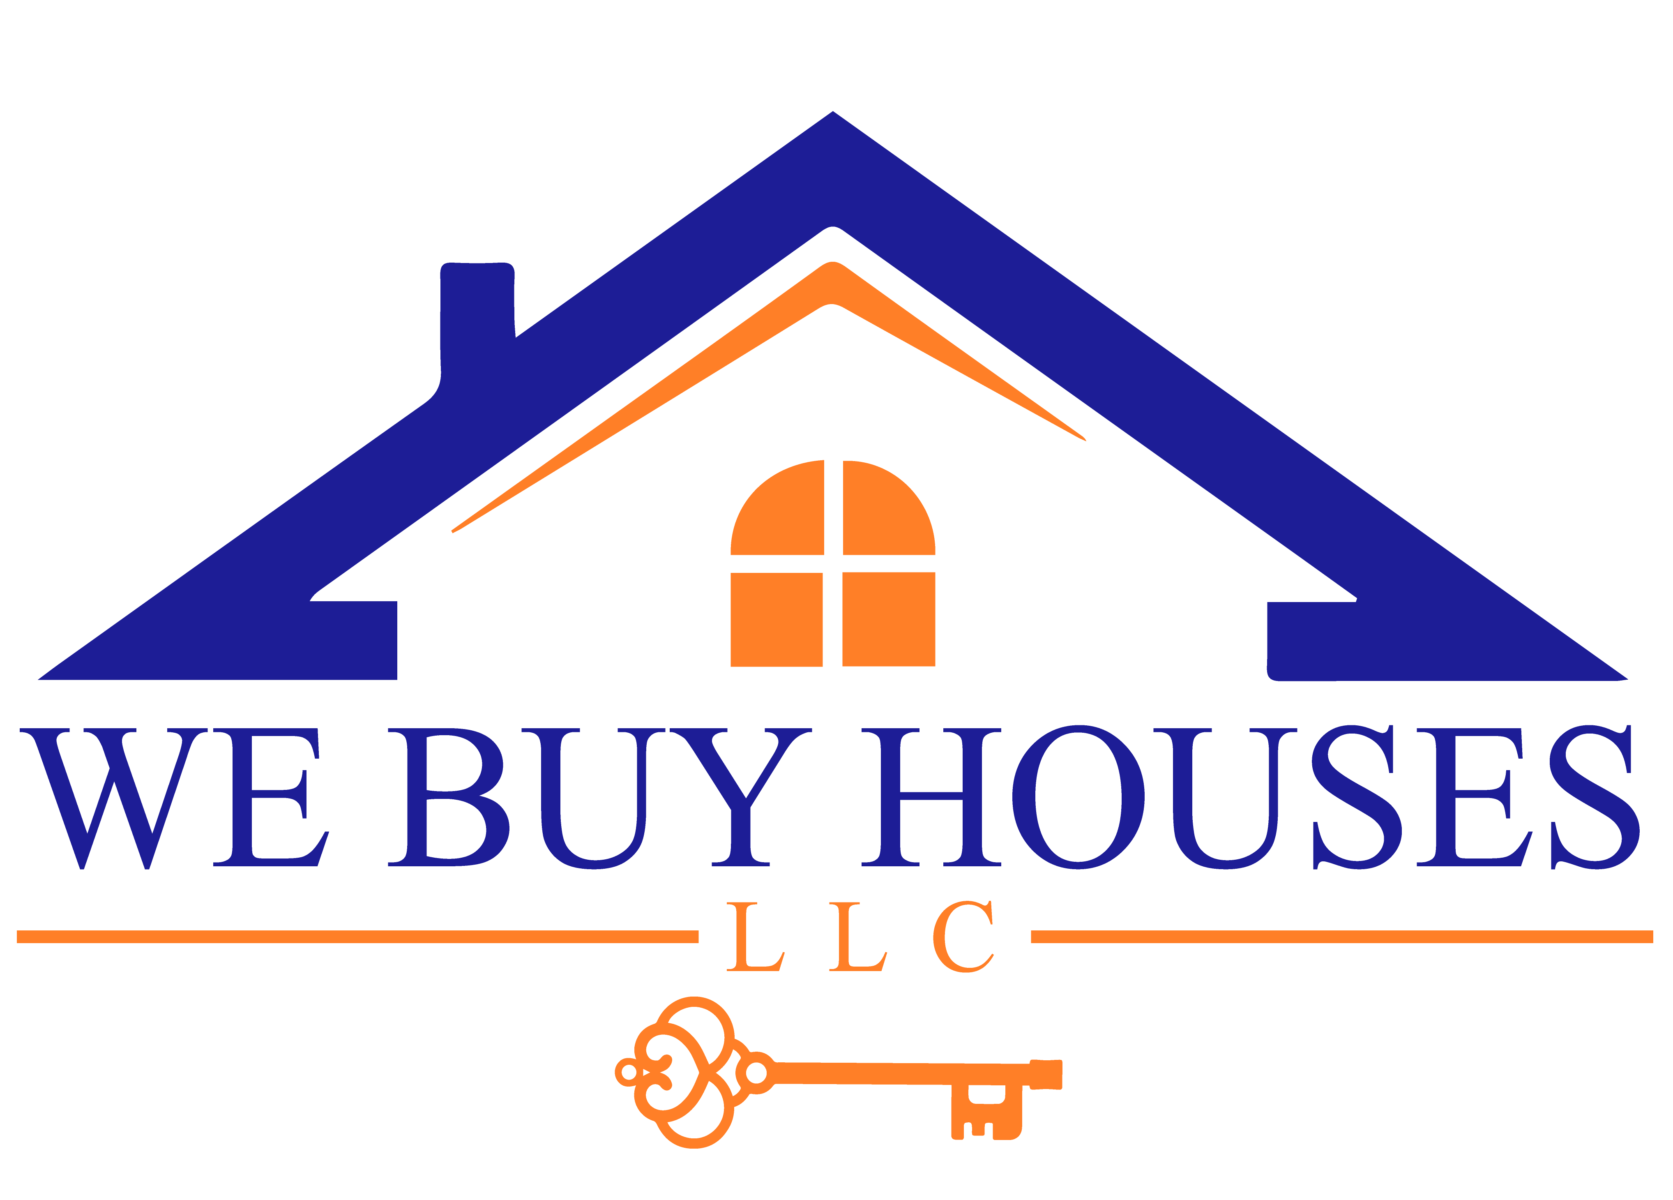 We Buy Houses, LLC logo